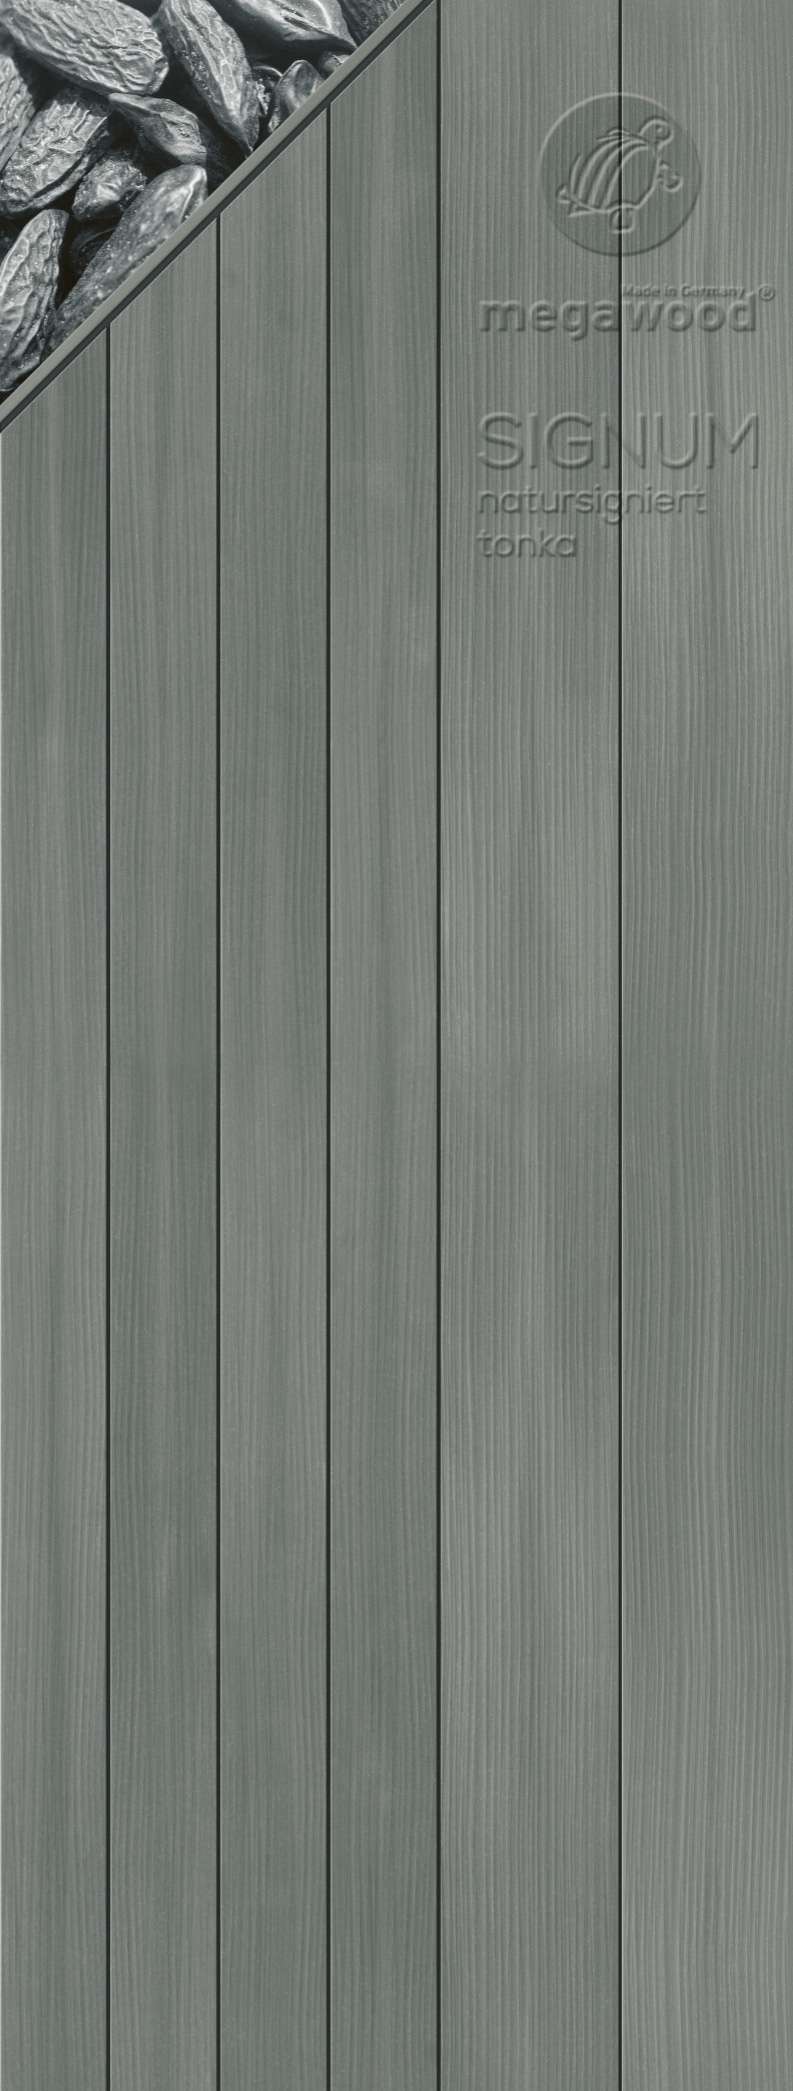 Terrassendiele SIGNUM von Megawood | Barfußdiele | 21 x 145 mm | Tonka